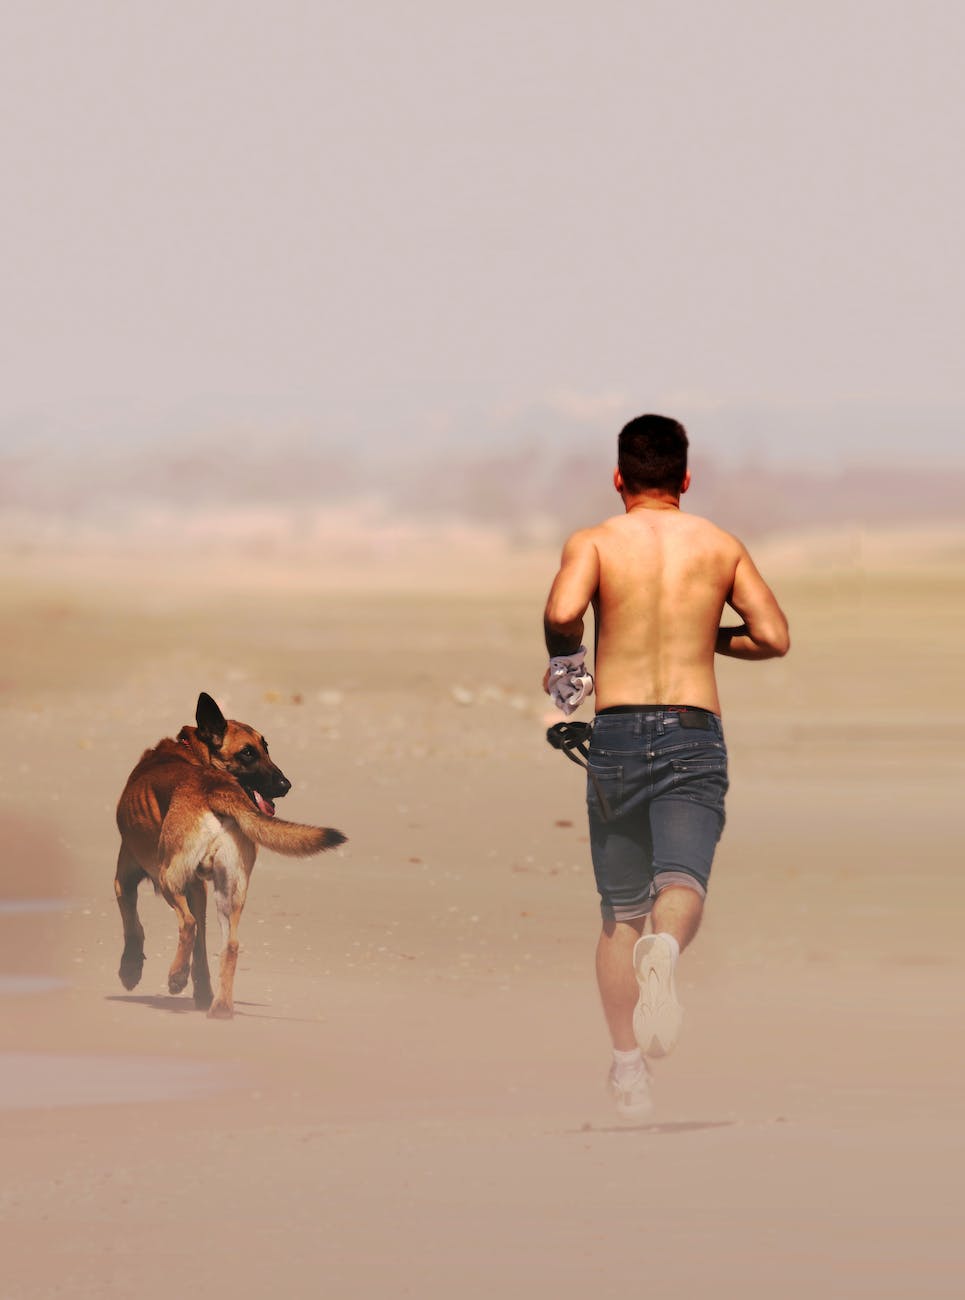 unrecognizable male athlete running near dog on sandy terrain